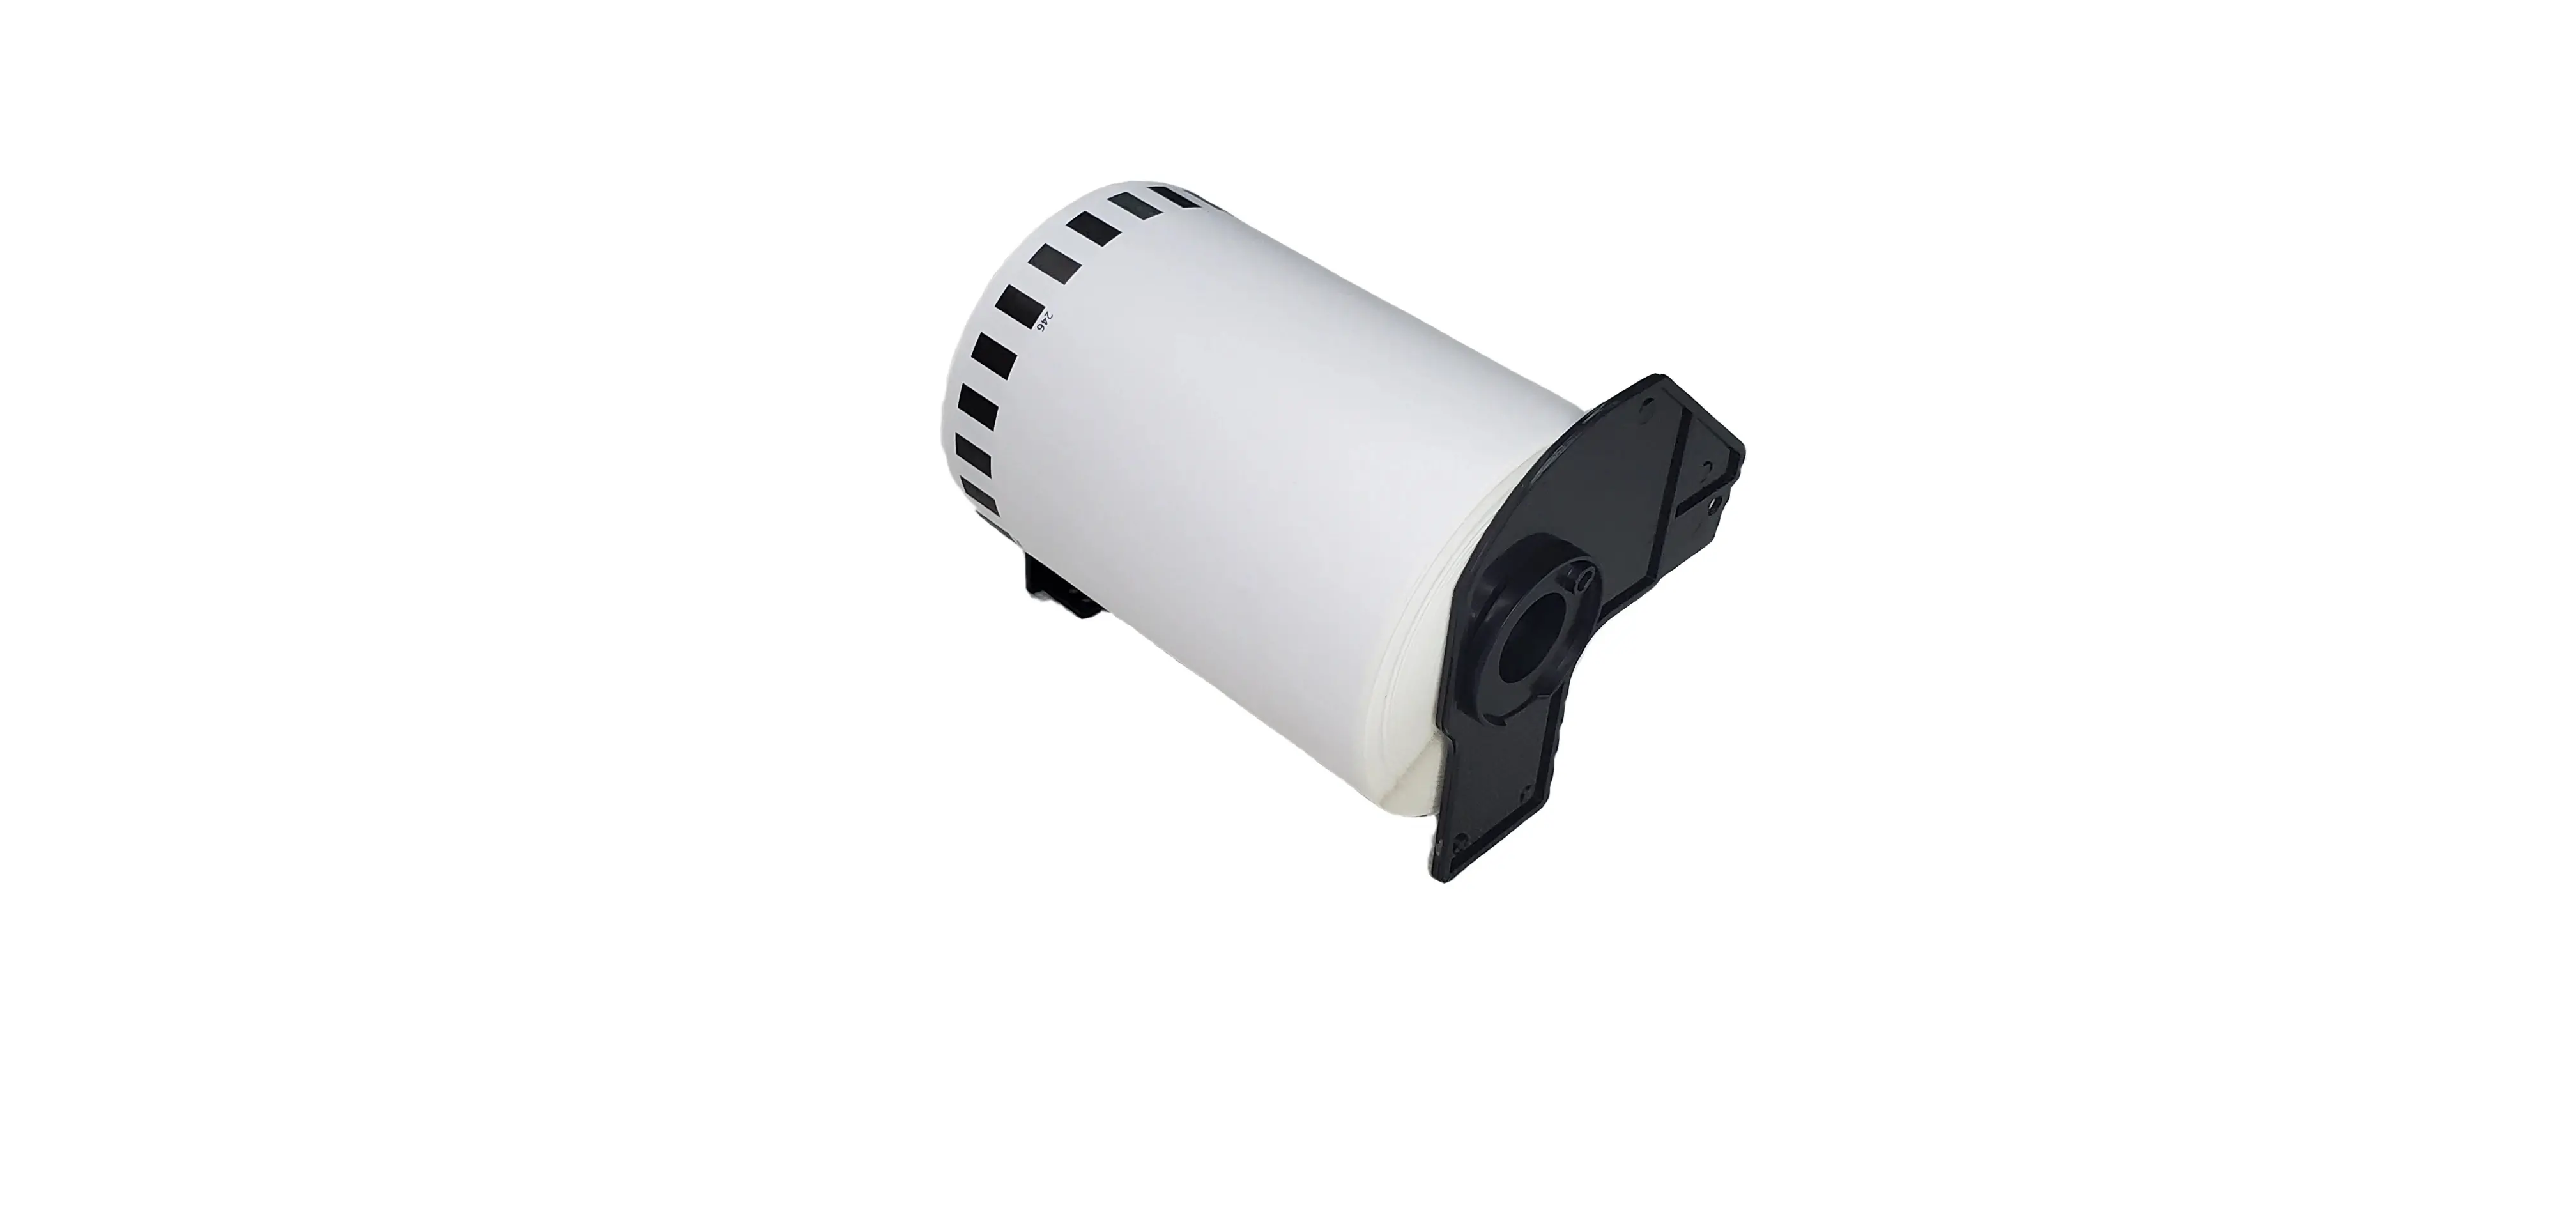 Makki съвместими етикети Brother DK-22246 - White Continuous Length Paper Tape 103mm x 30.48m, Black on White - MK-DK-22246 - image 3